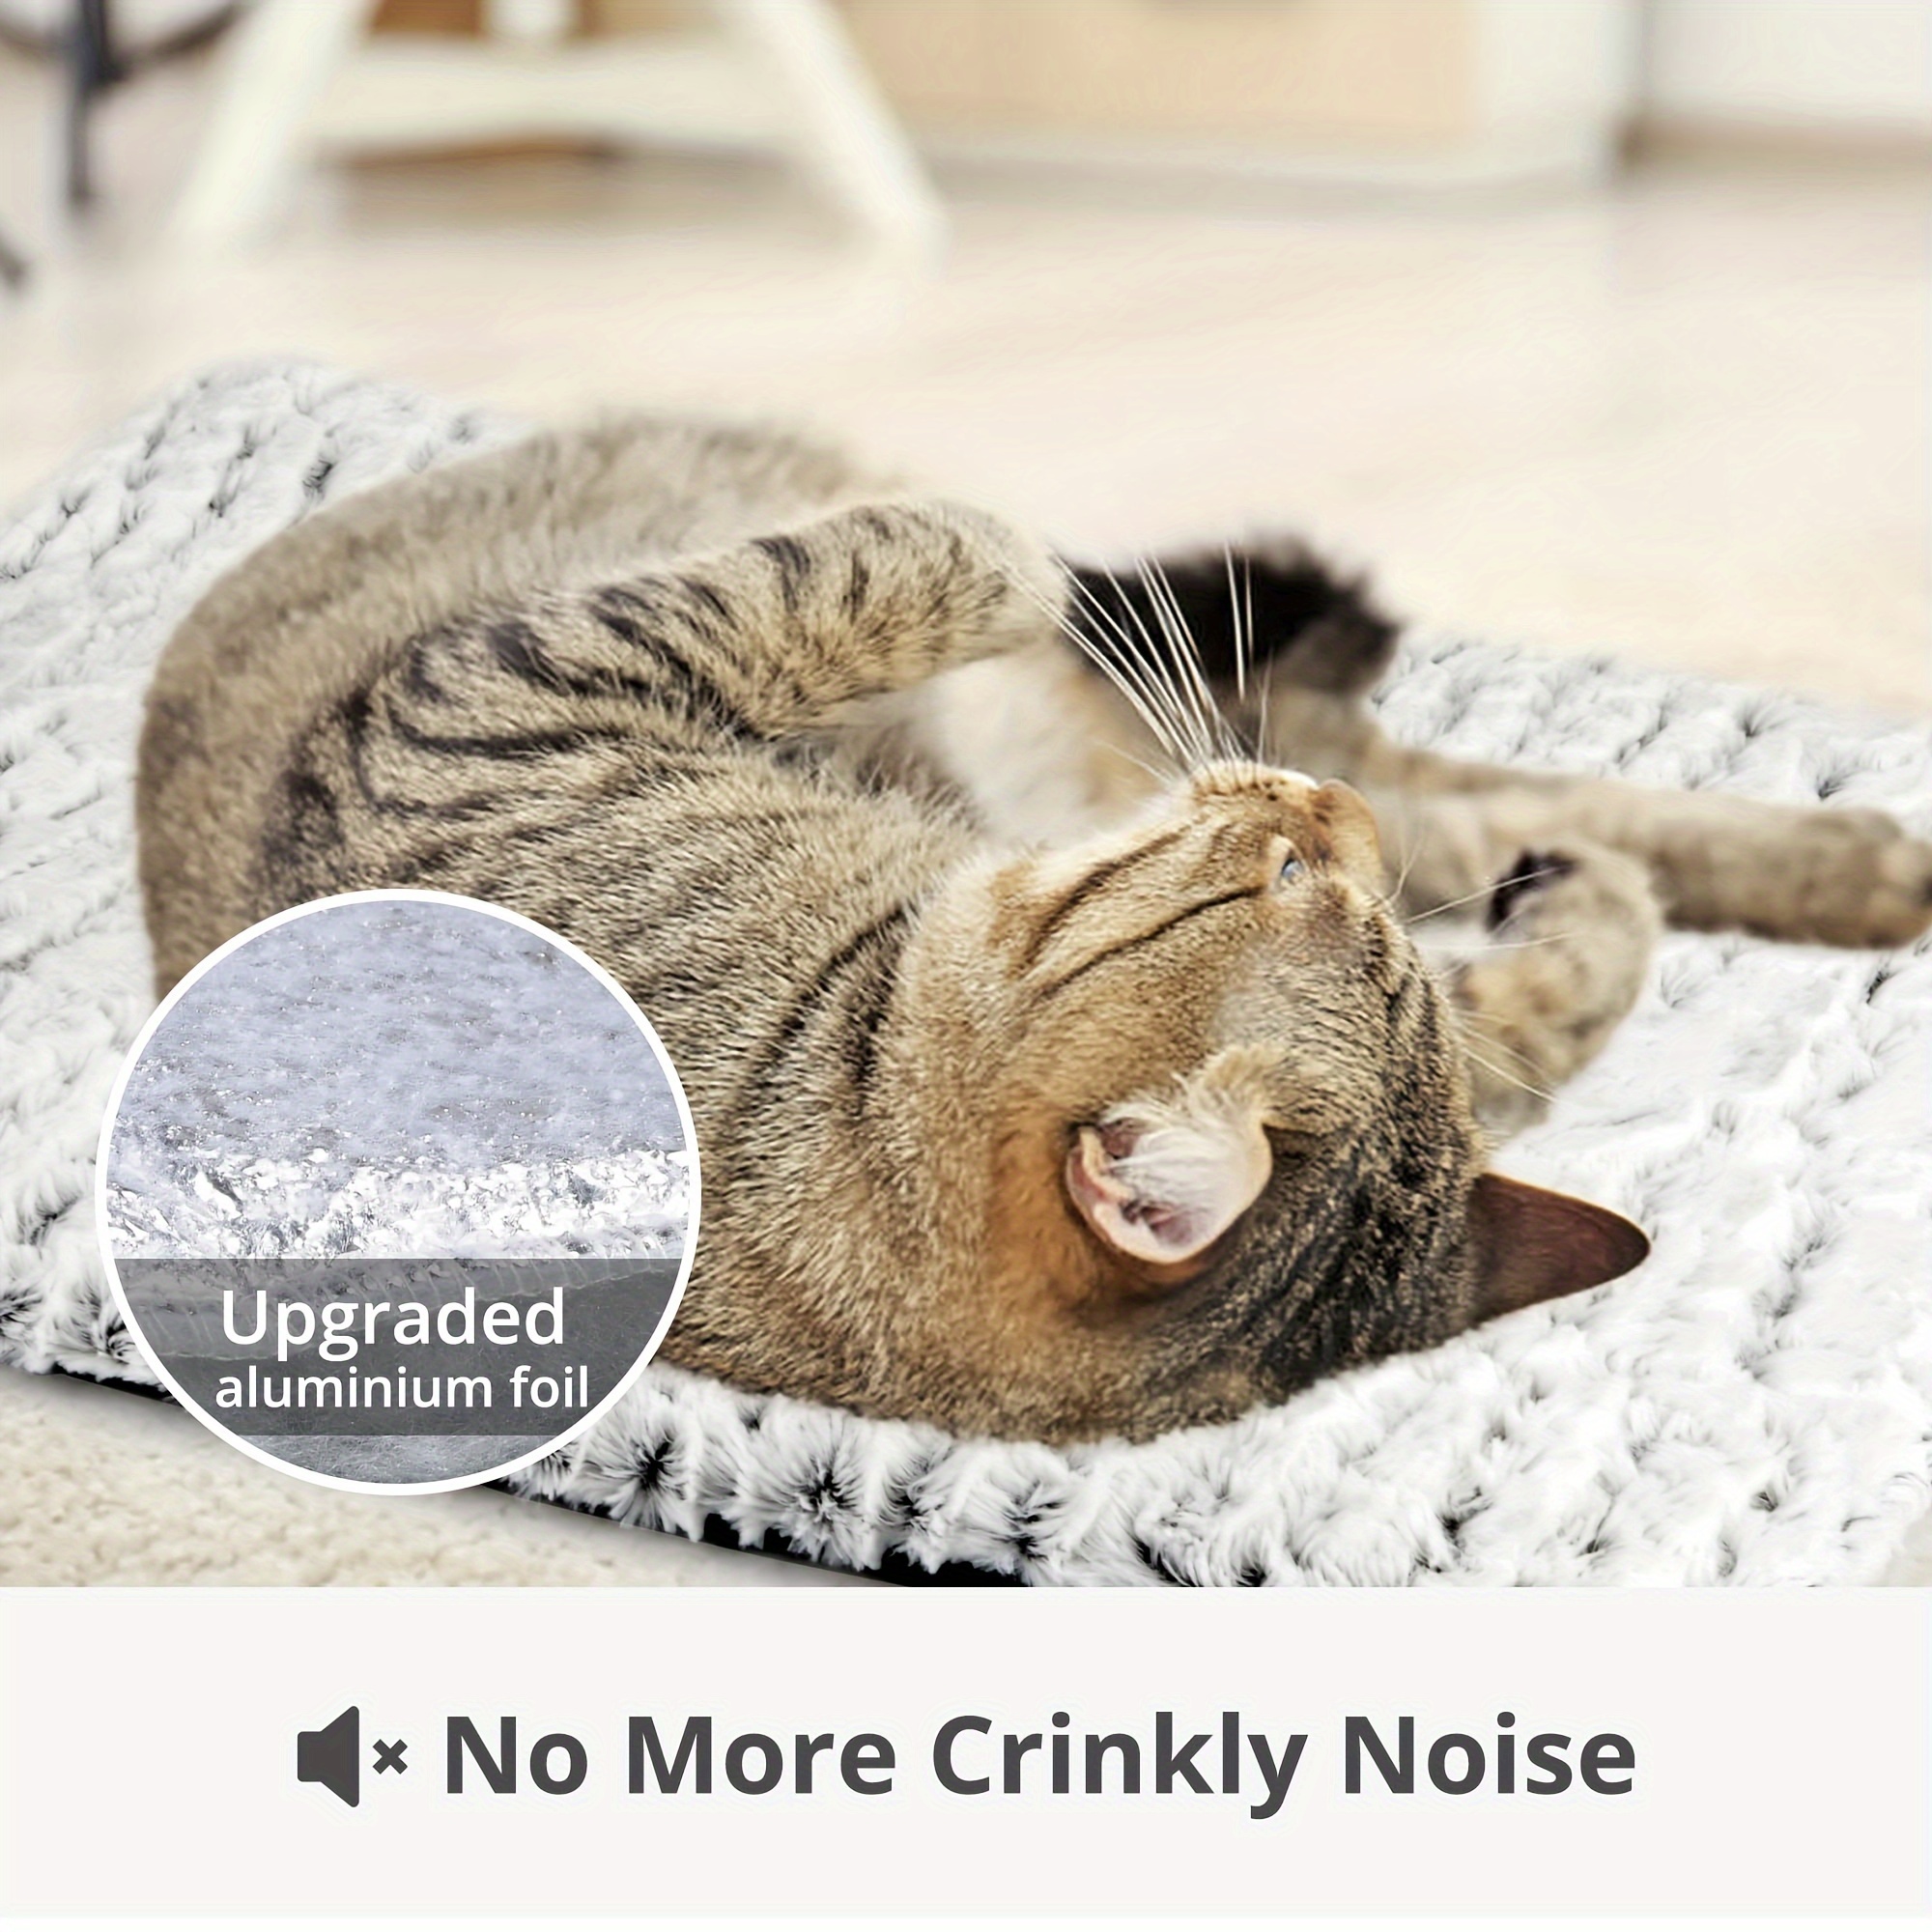 Casa para gatos con calefacción, plegable, impermeable, con temporizador,  para gatos en interiores y exteriores, con alfombrilla térmica, cama para